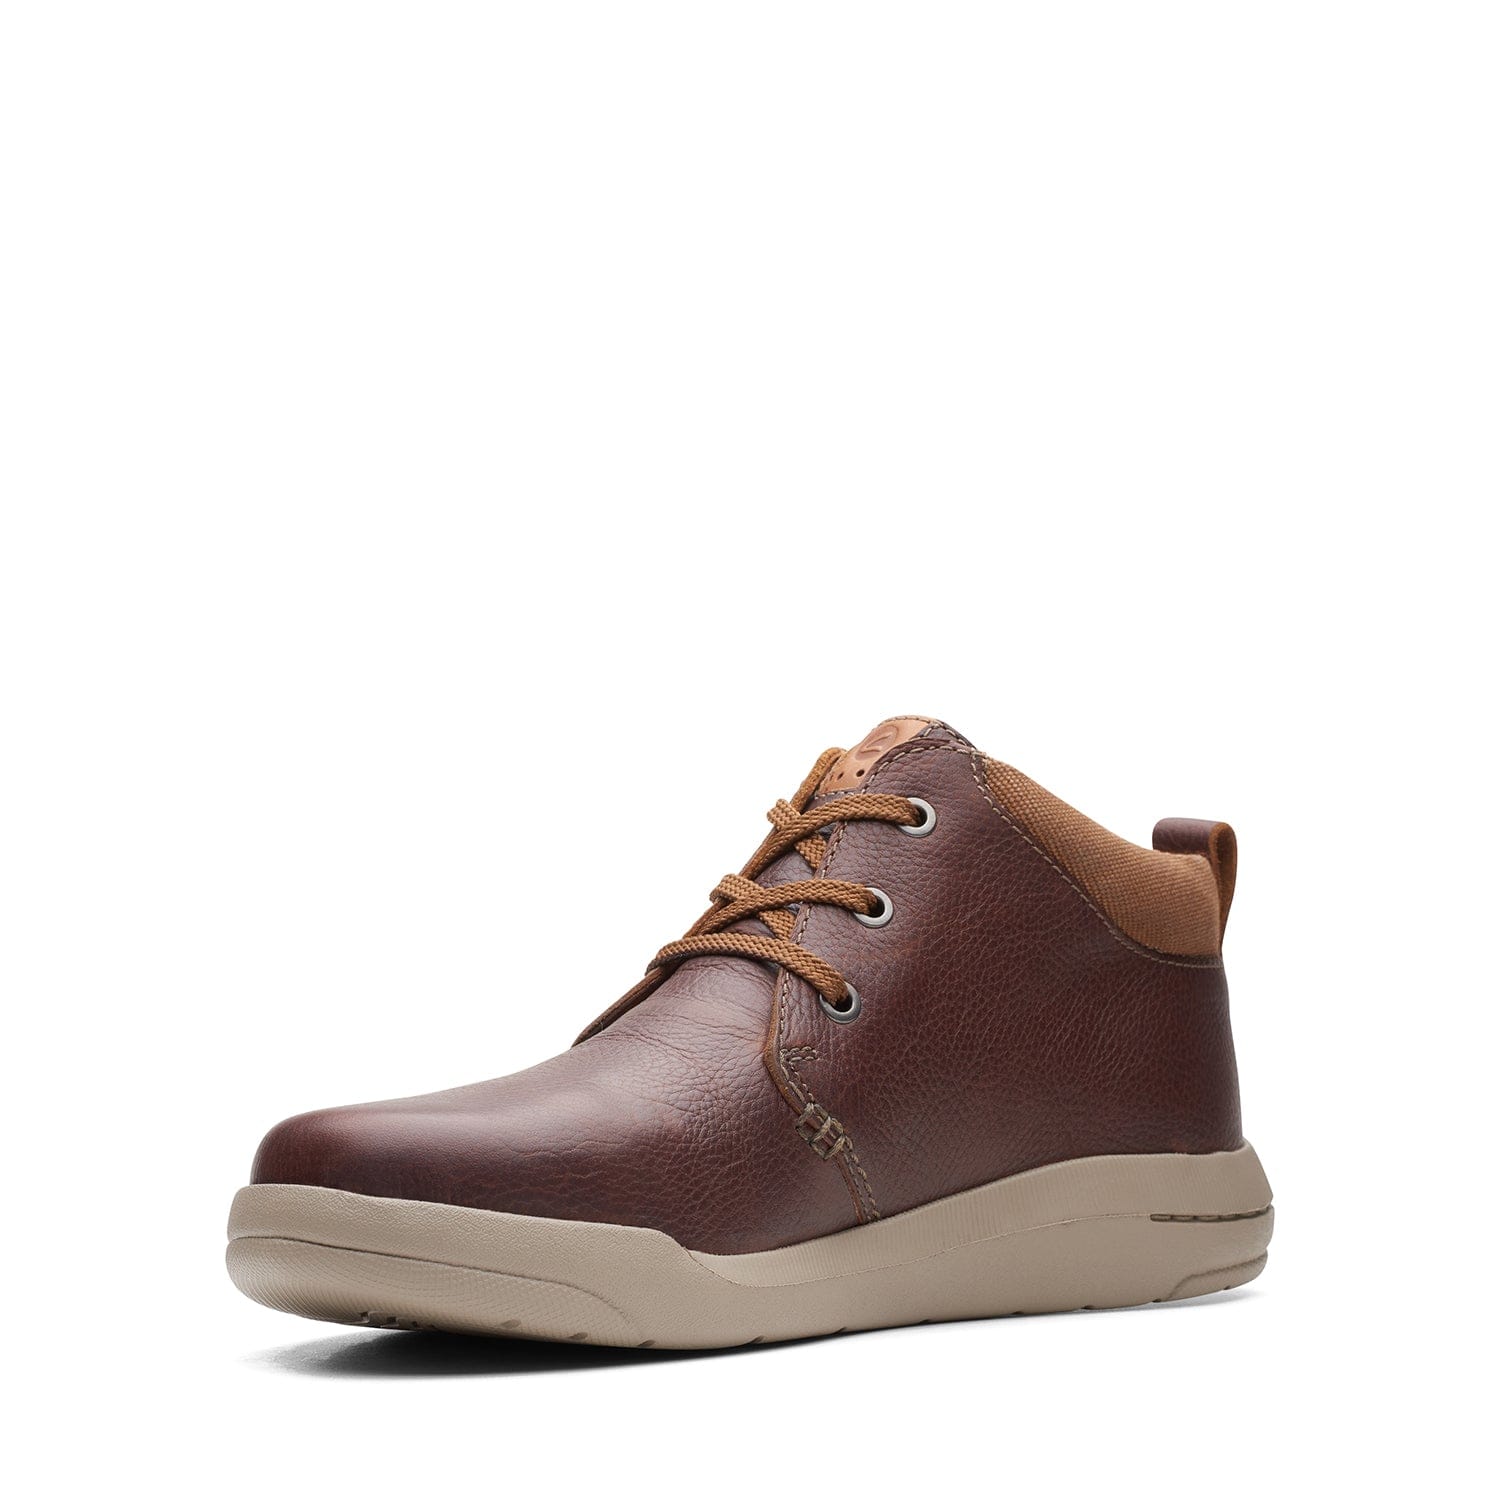 Clarks Driftway Mid Boots - Dark Tan Leather - 261629667 - G Width (Standard Fit)